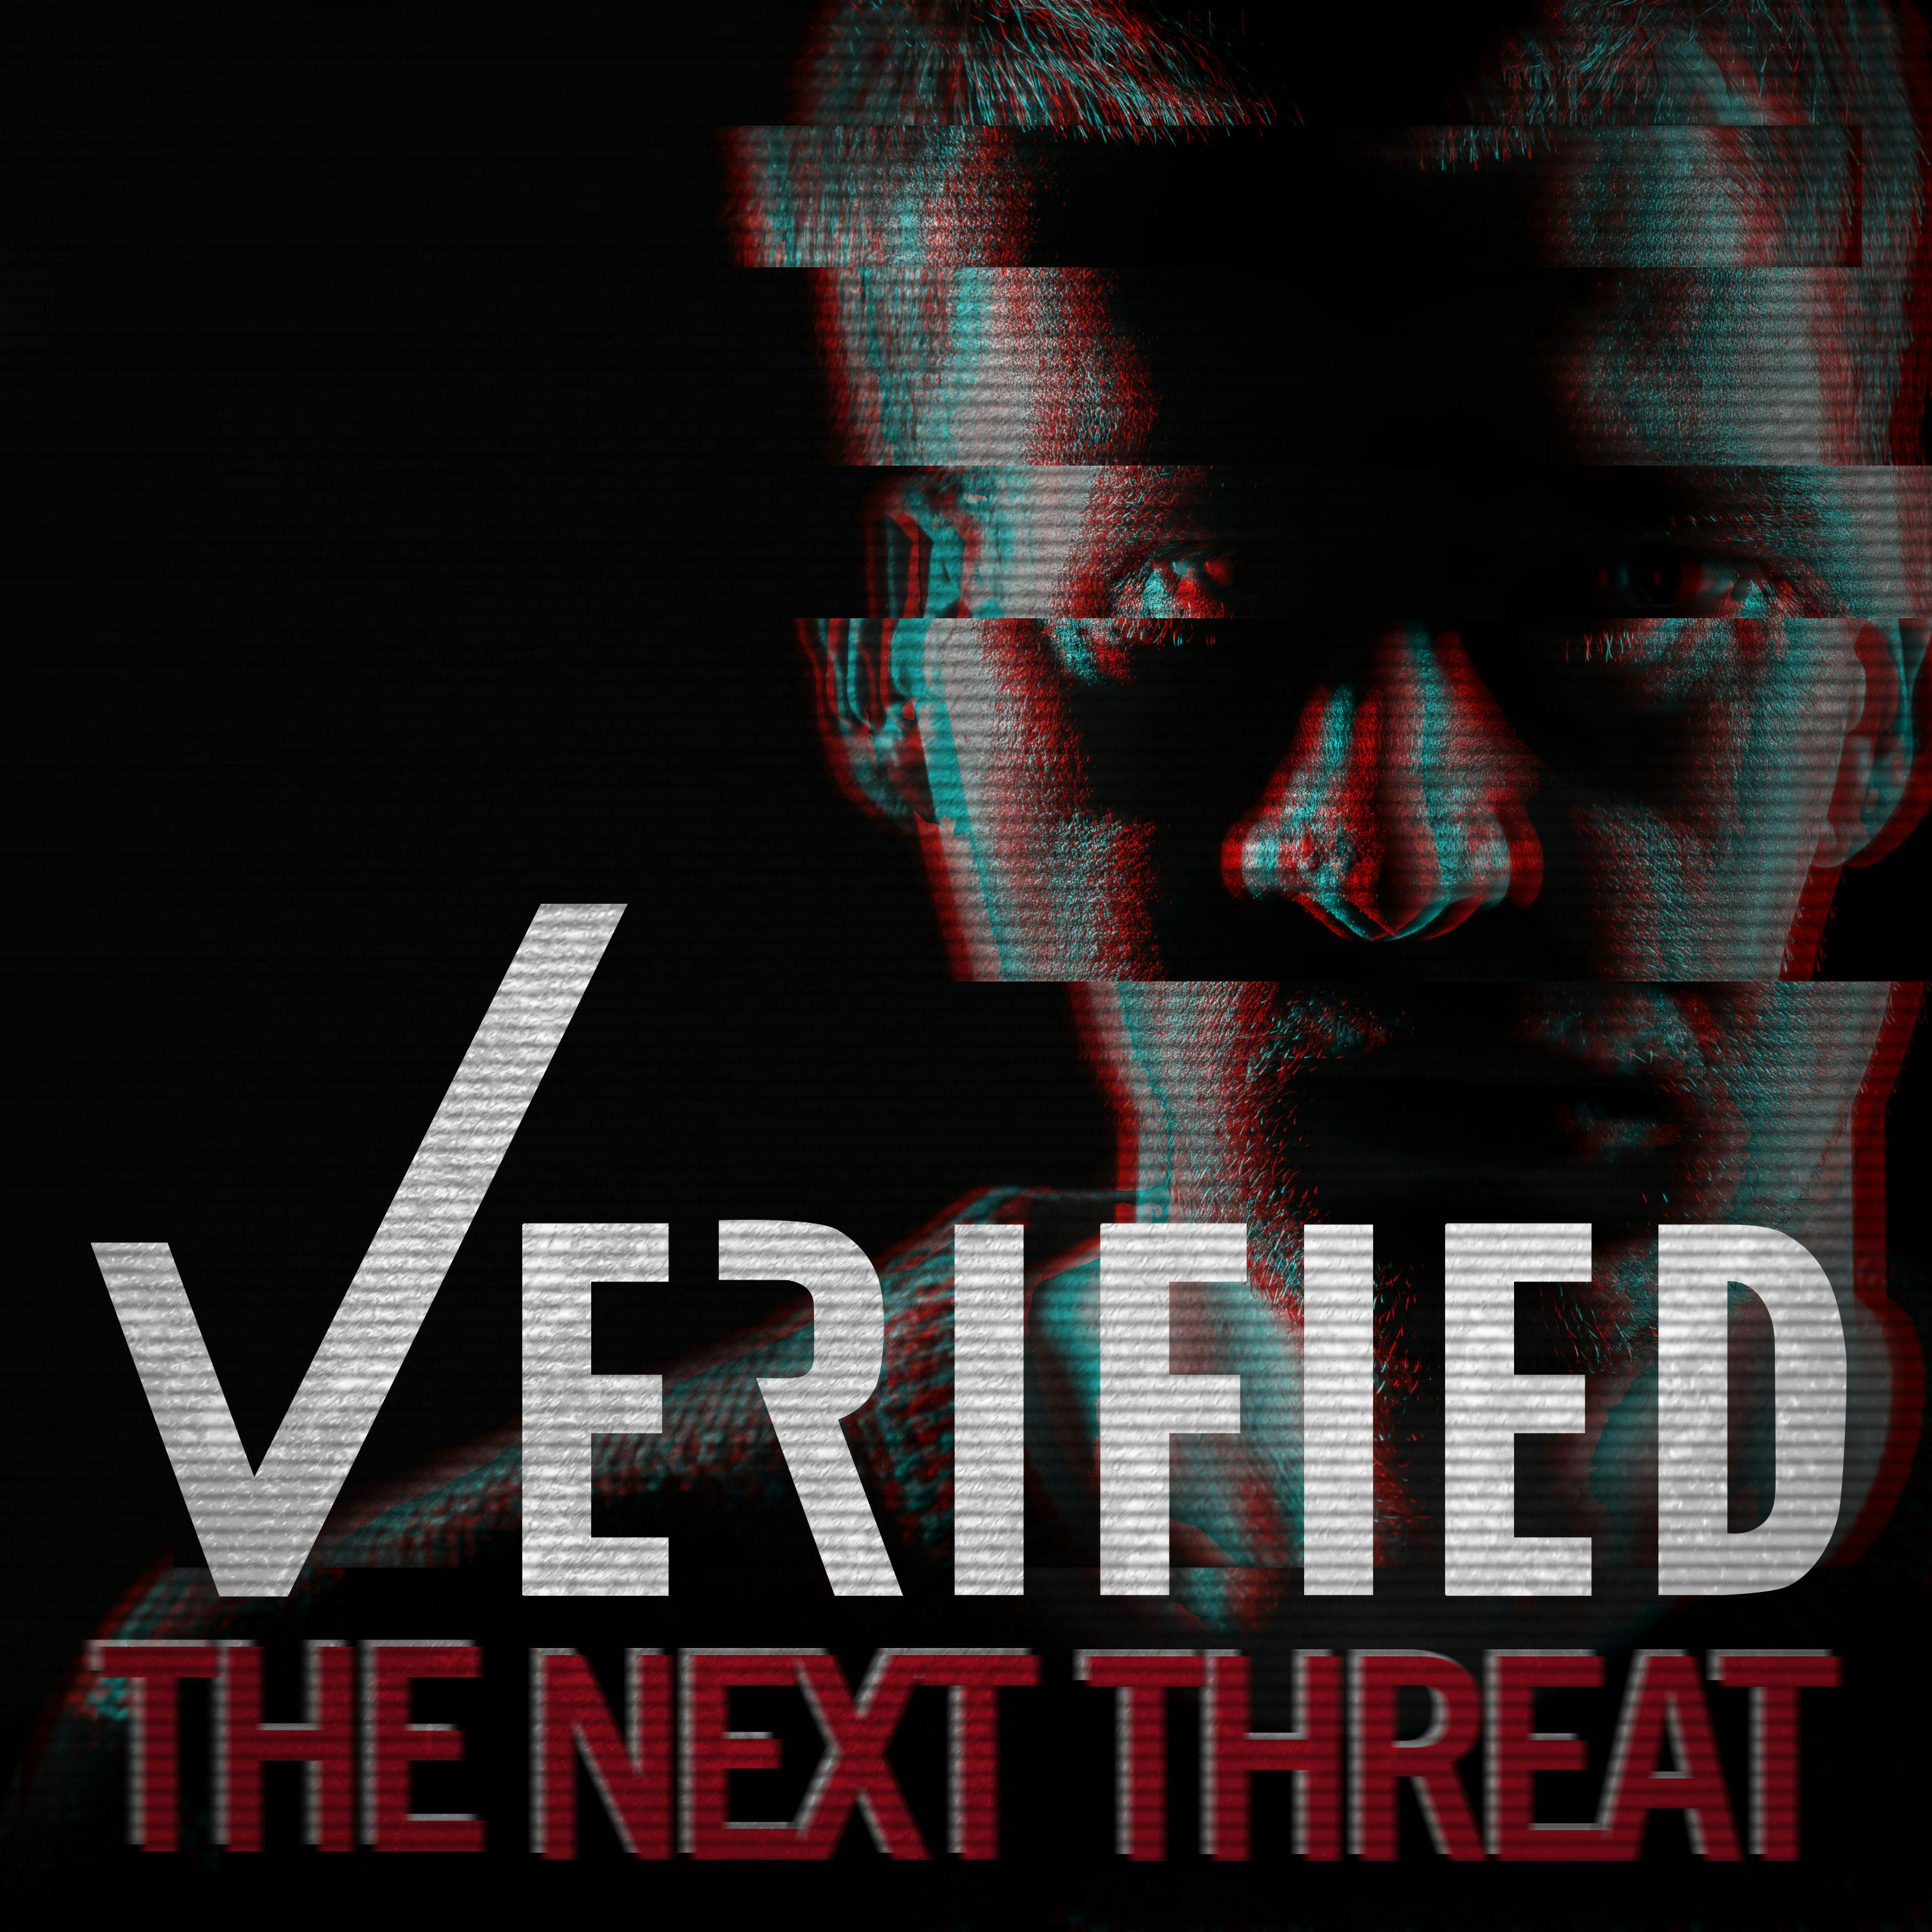 Introducing Verified: The Next Threat